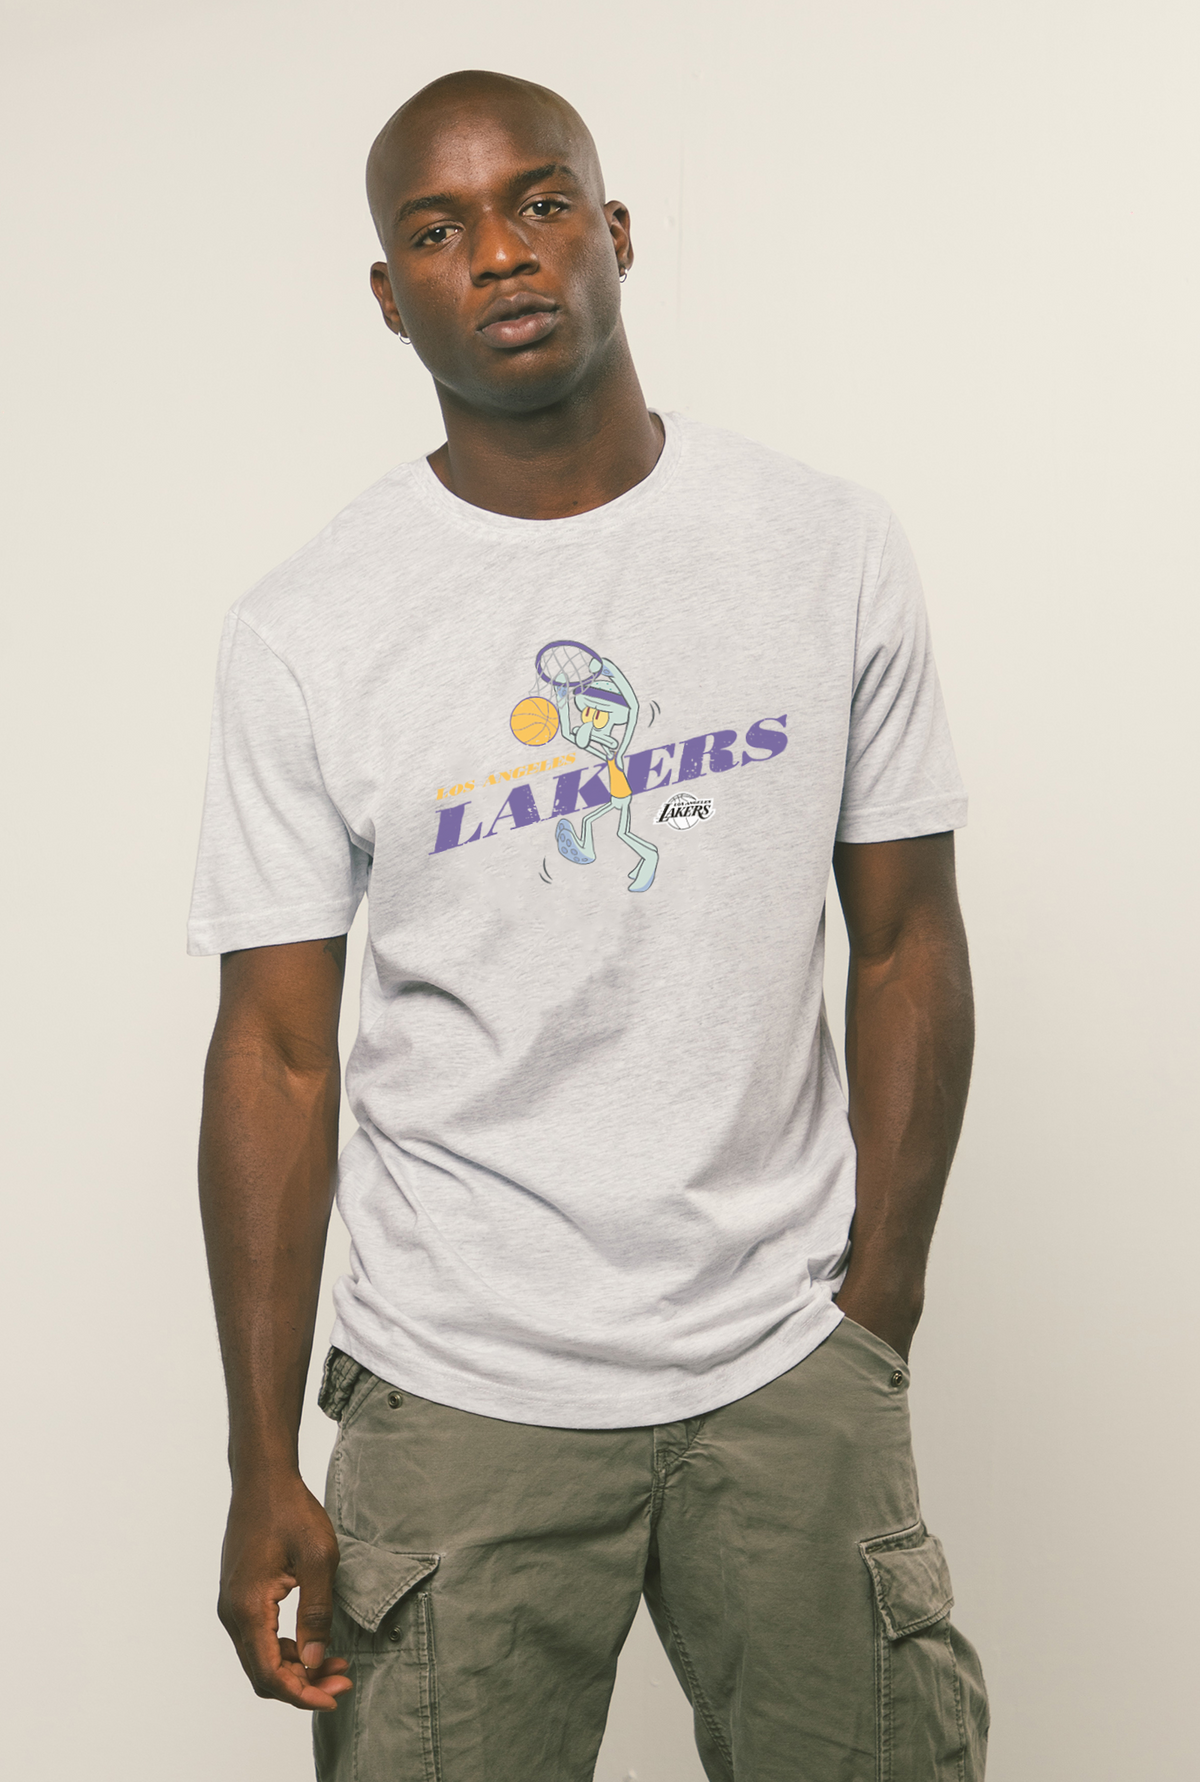 Los Angeles Lakers Squidward T-Shirt - Ash